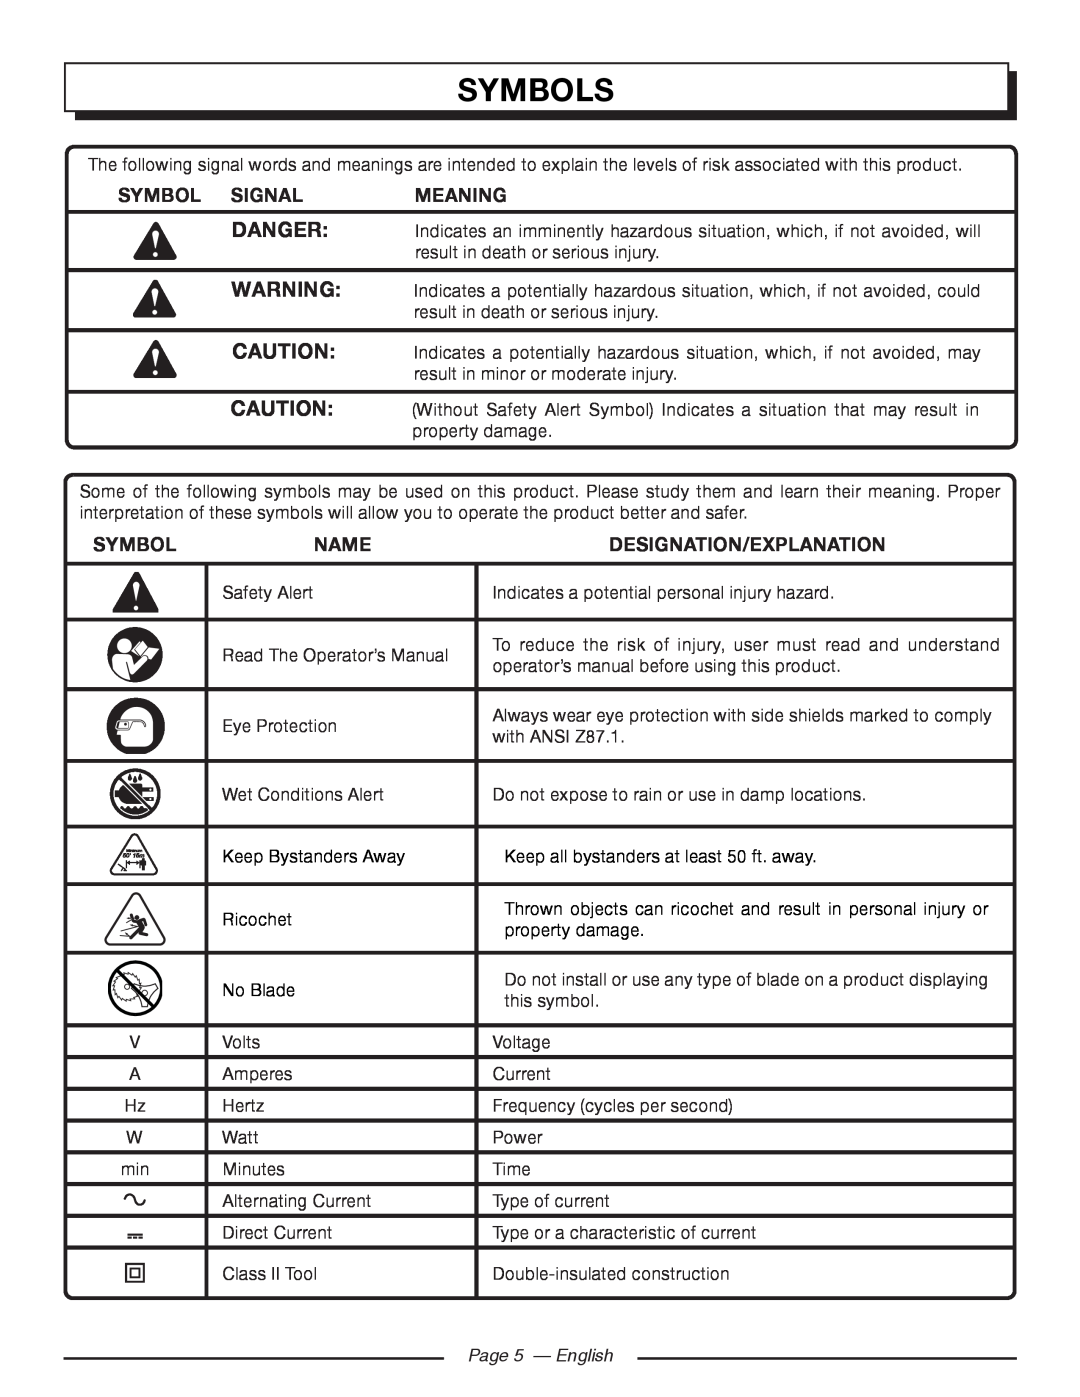 Homelite UT41112 Symbols, Danger, Symbol Signal, Meaning, Name, Designation/Explanation, Page 5 - English 